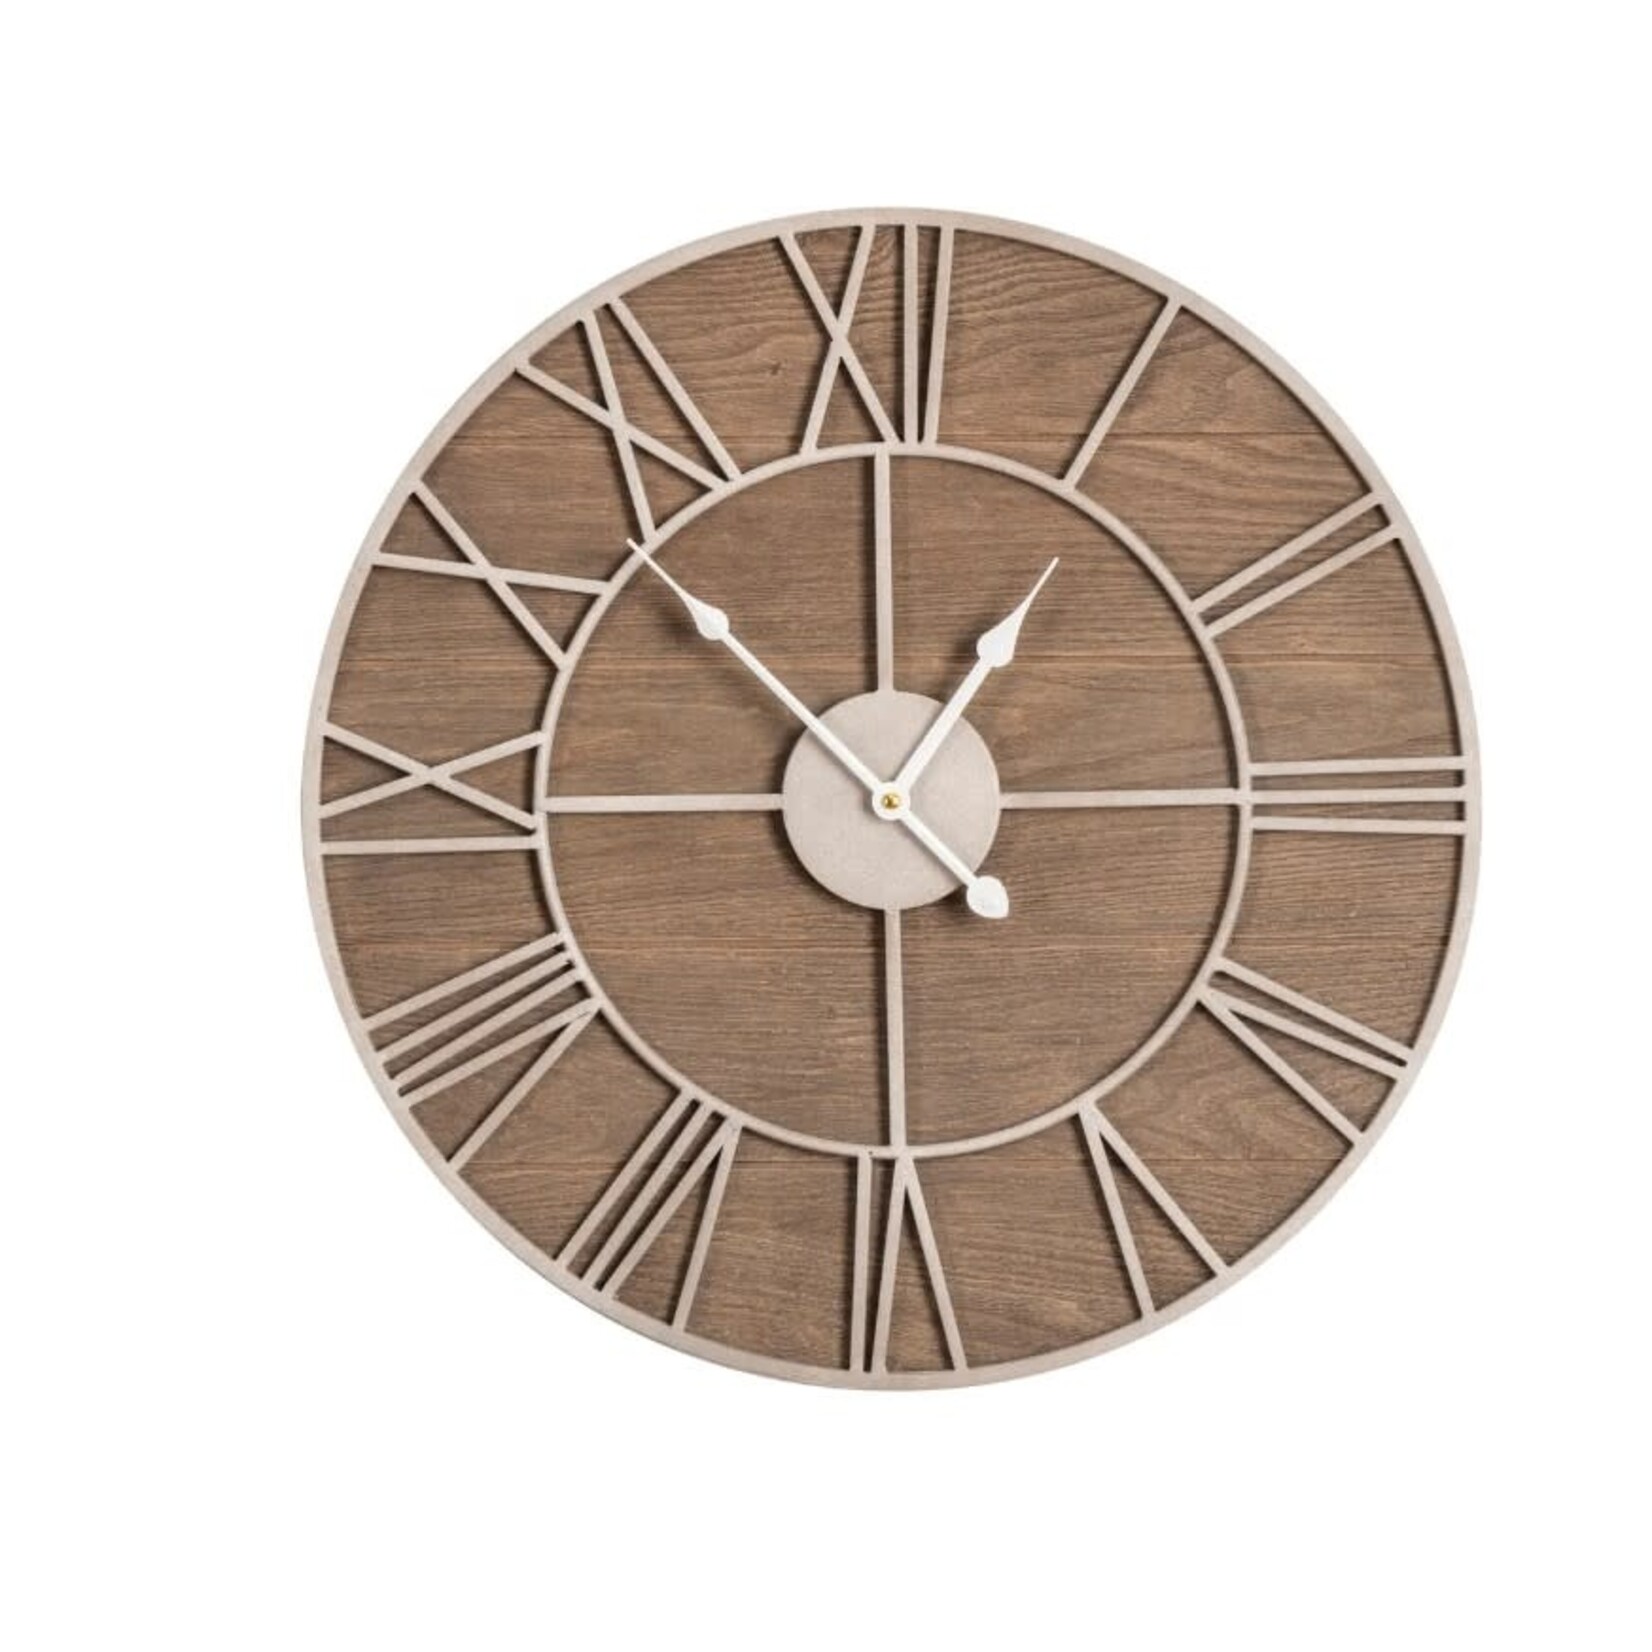 Mickler & Co. Timeless Wooden Clock